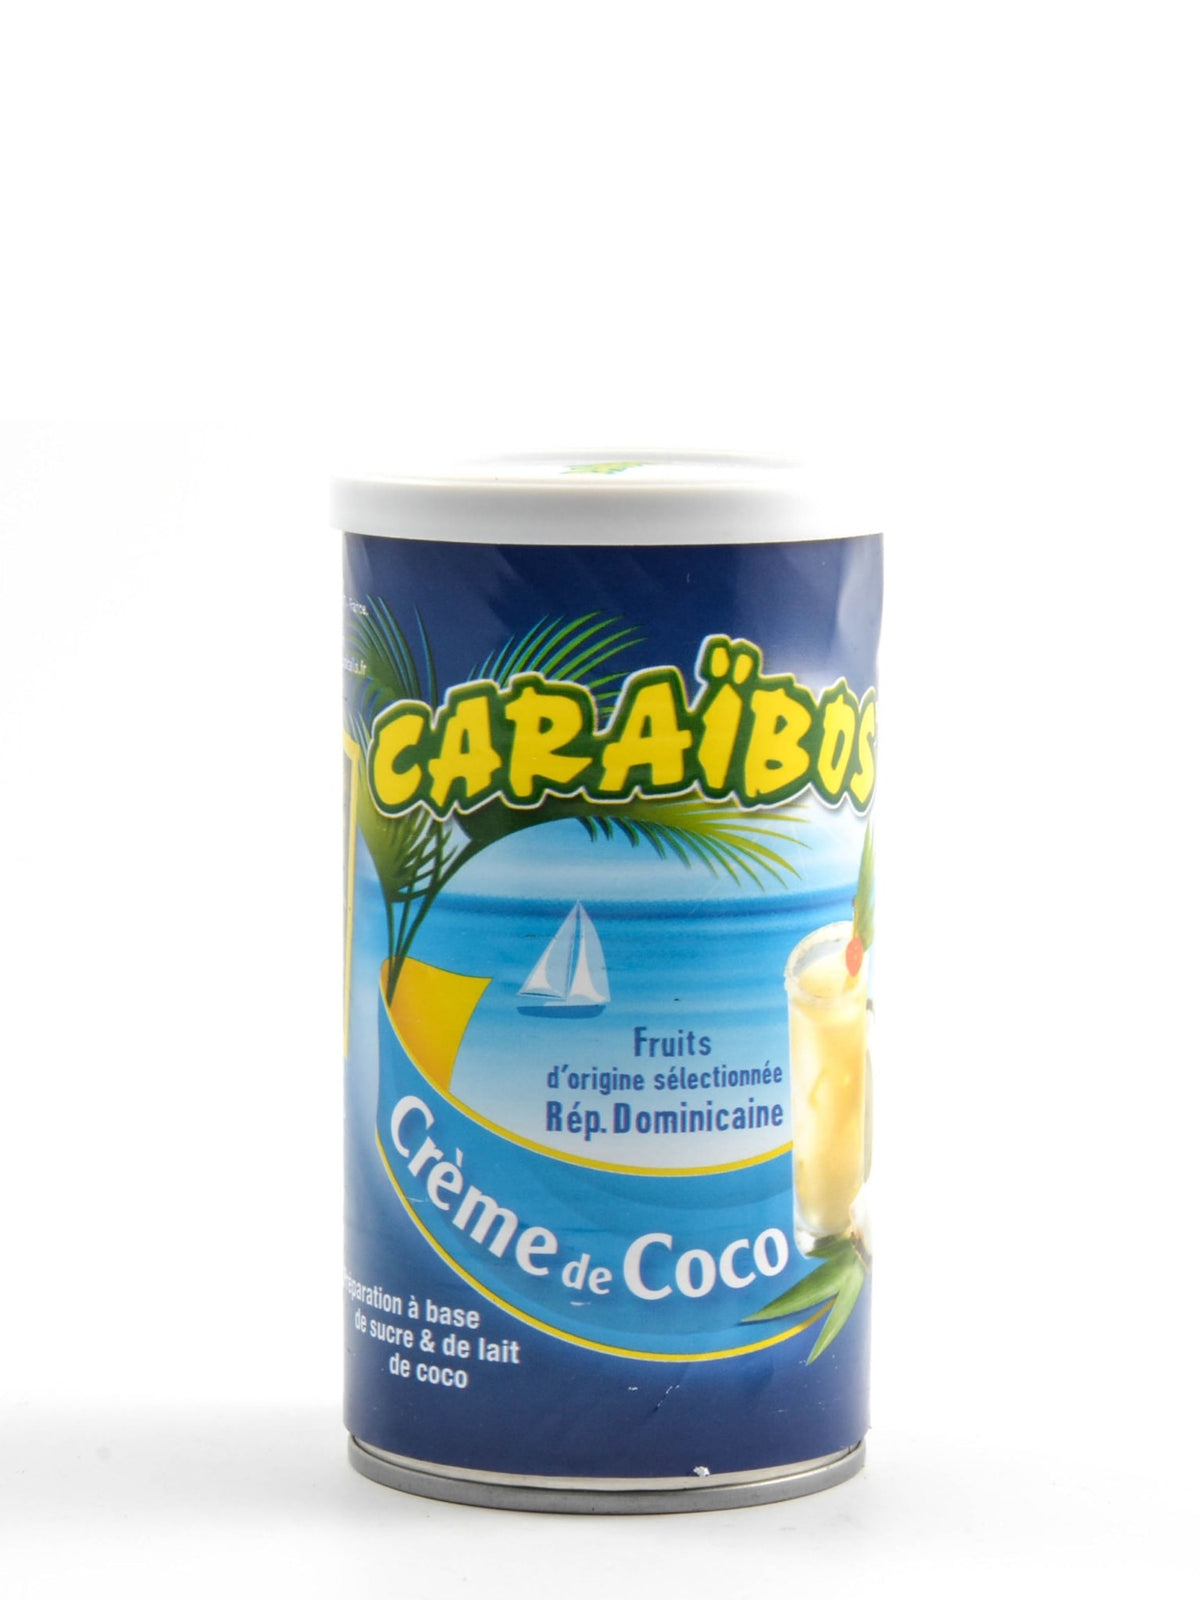 Caraïbos kokoskreme